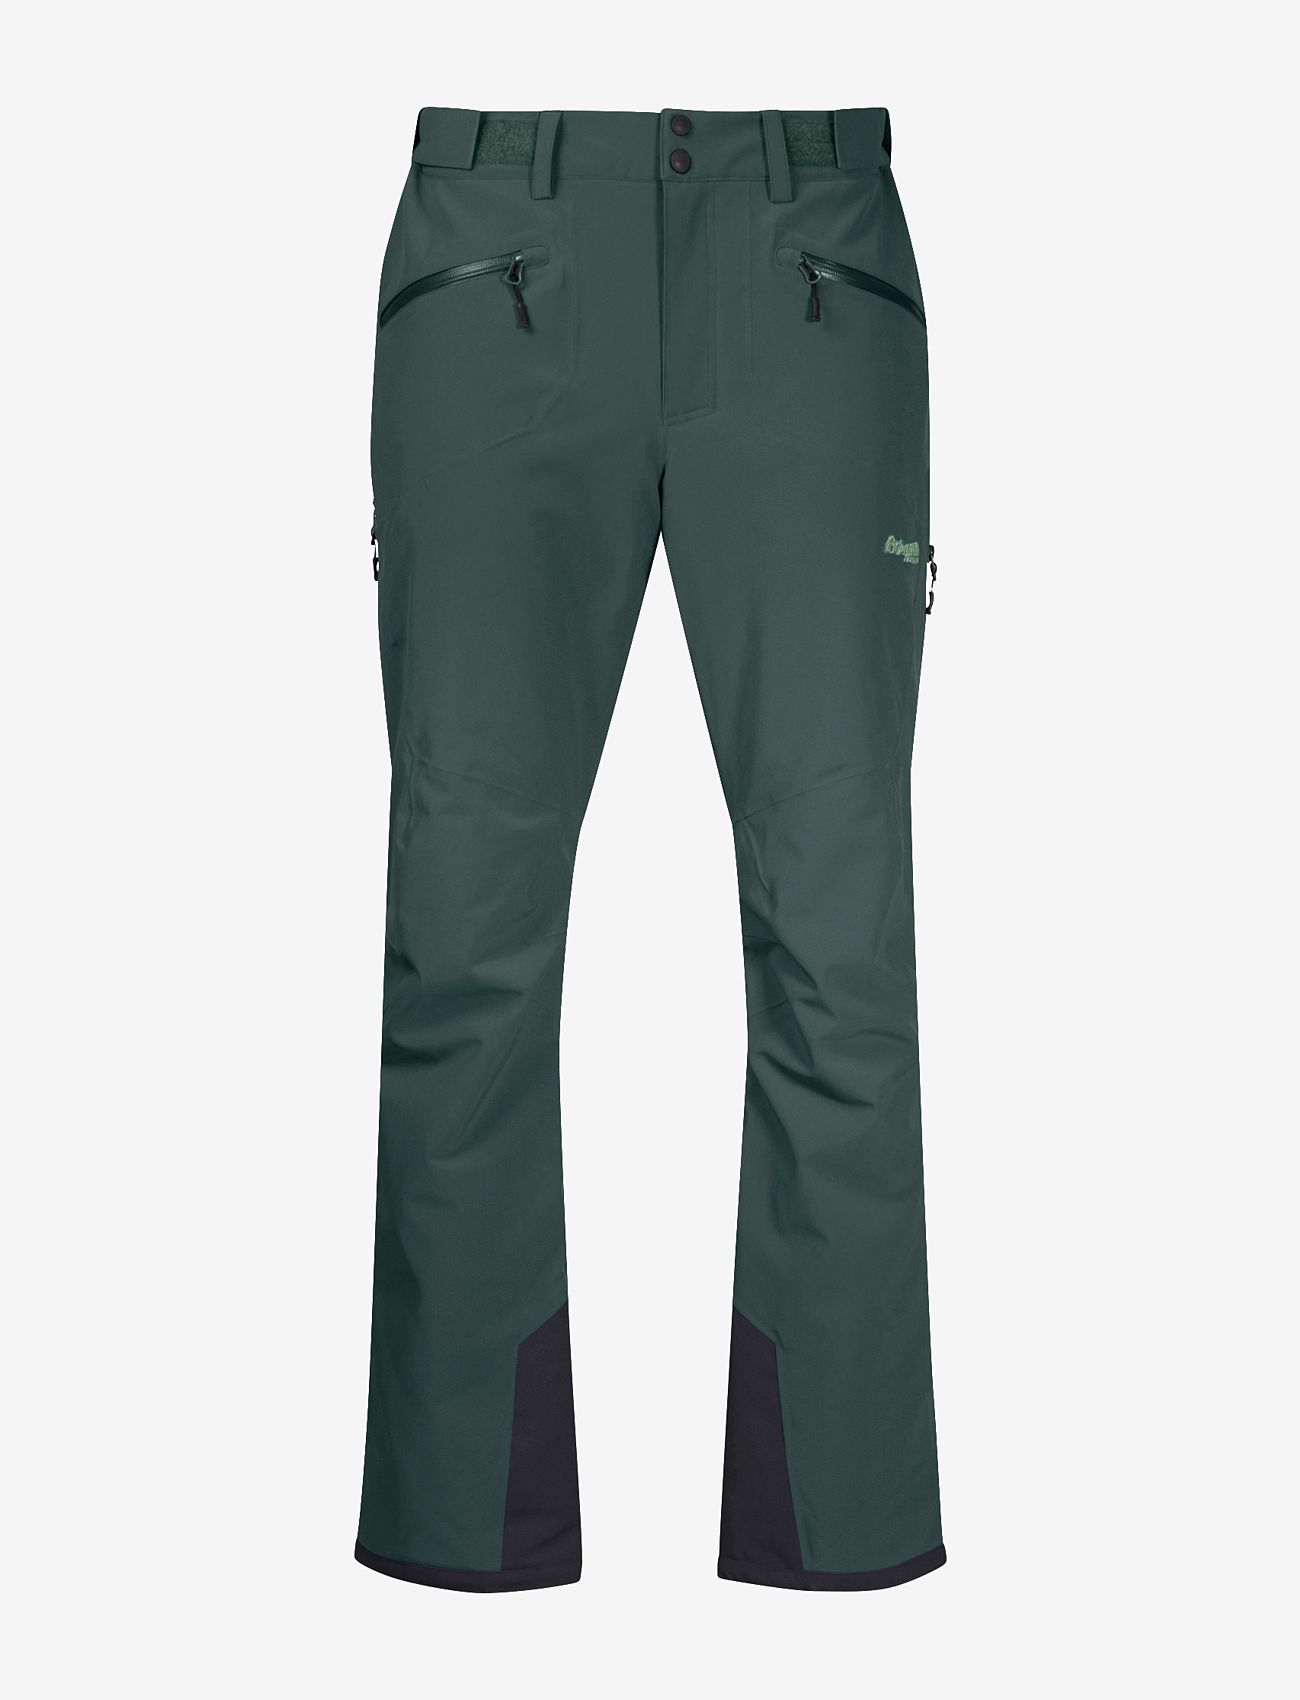 Bergans - Oppdal Insulated Pants - hiihto- & lasketteluhousut - duke green - 0